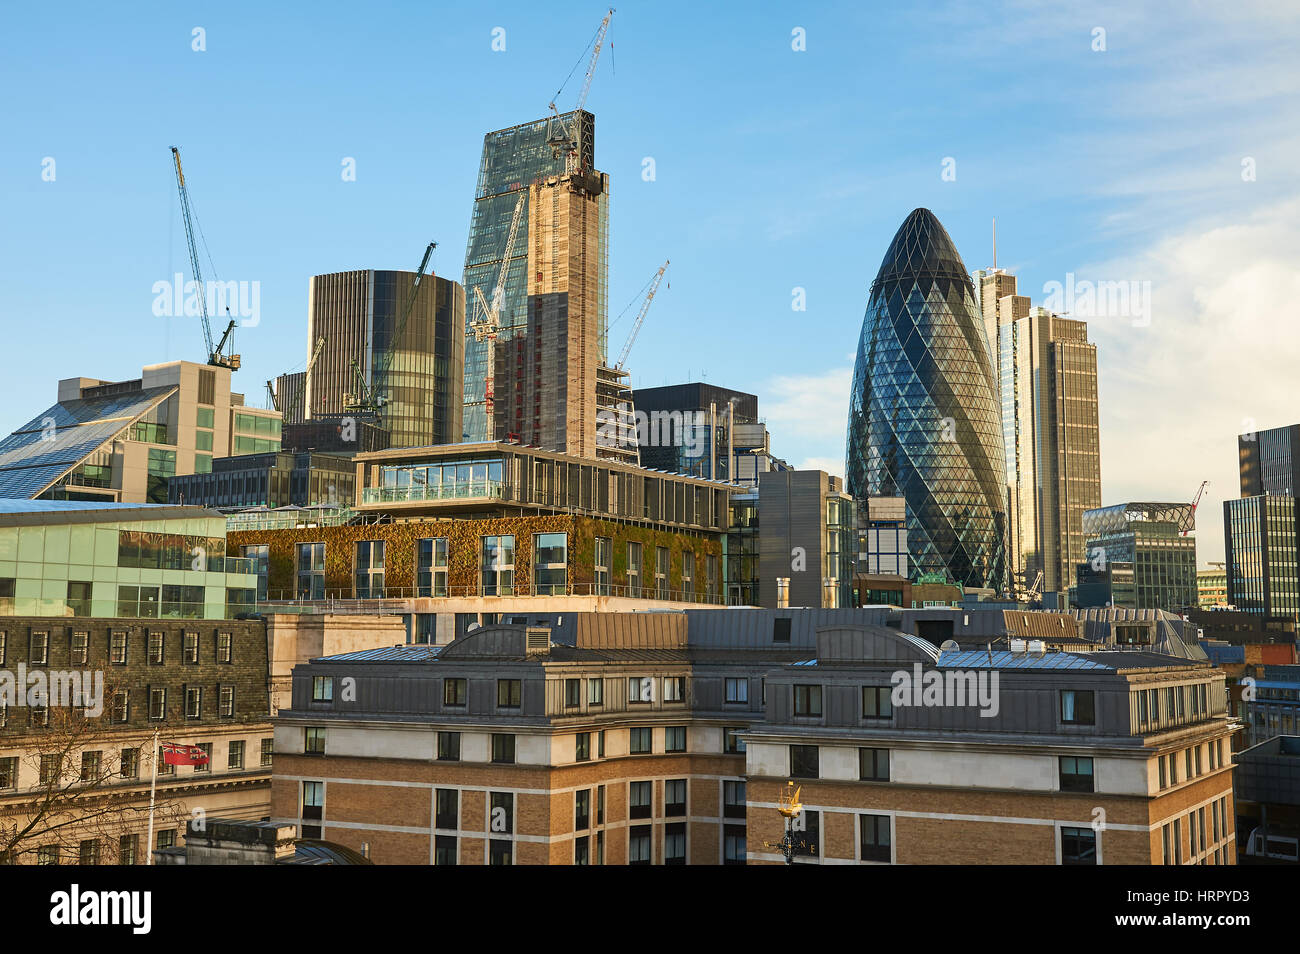 City of London skyline with The Gerkin building Stock Photo